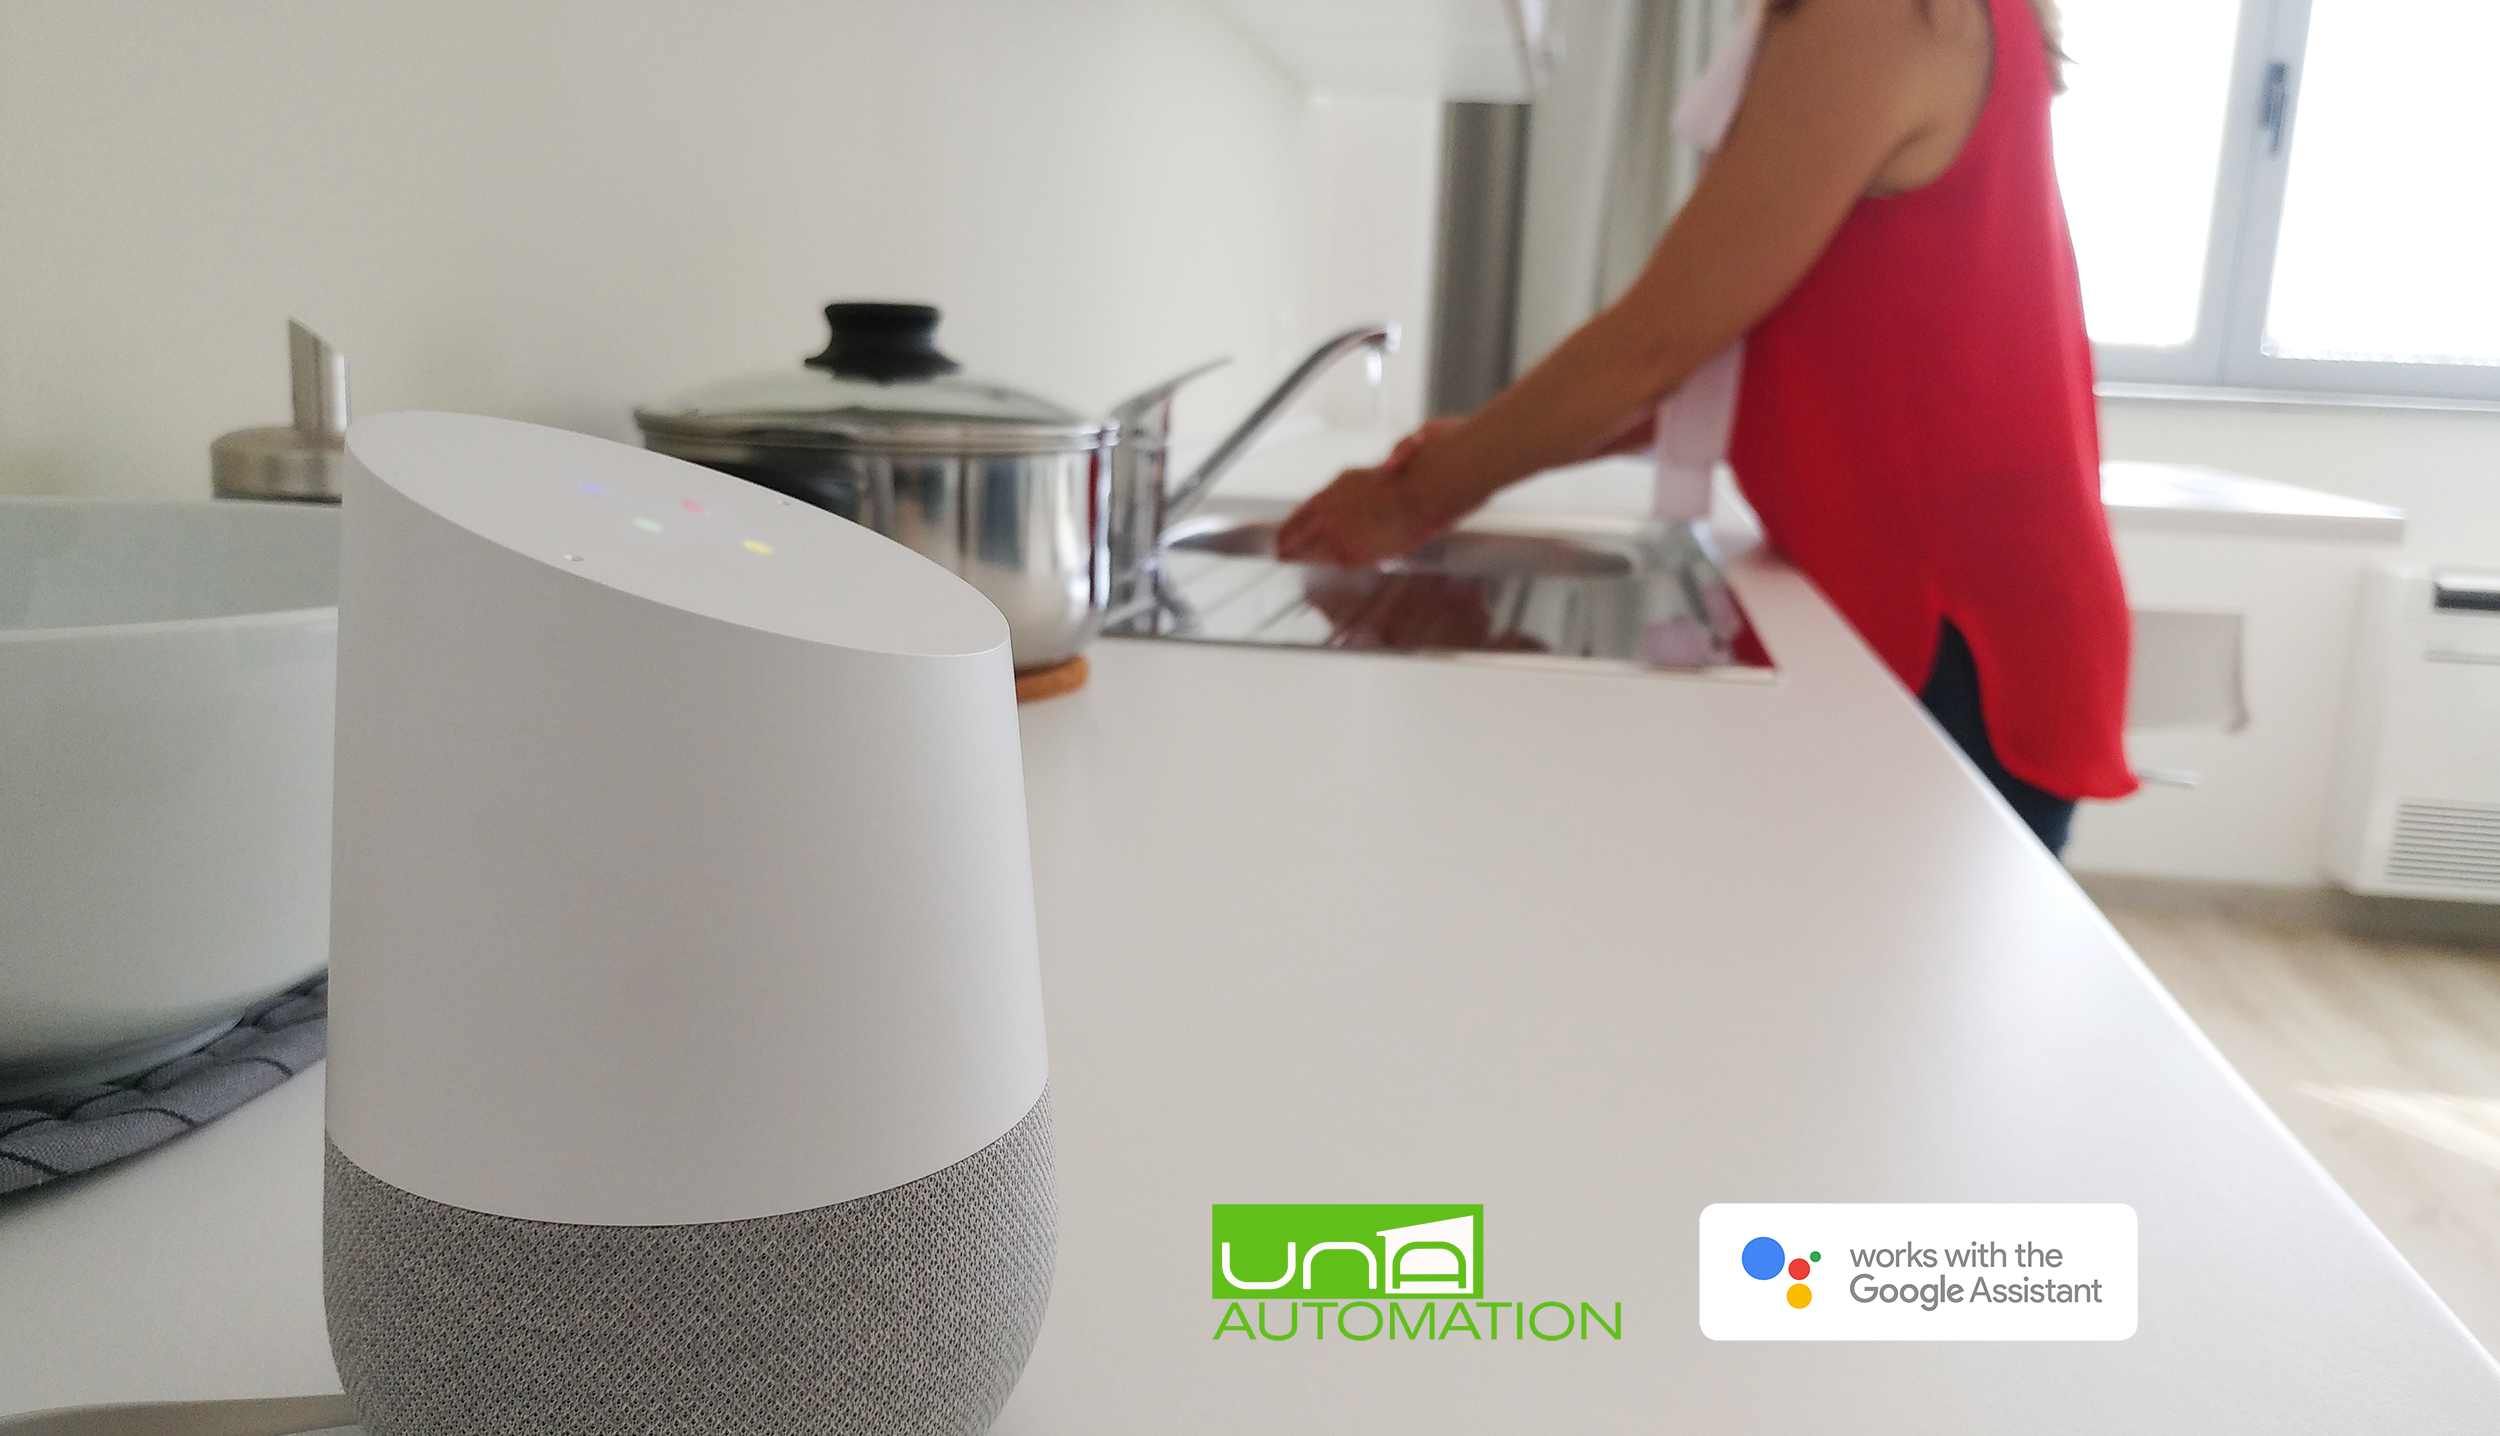 Google Home or Alexa? - Domologica UNA Automation